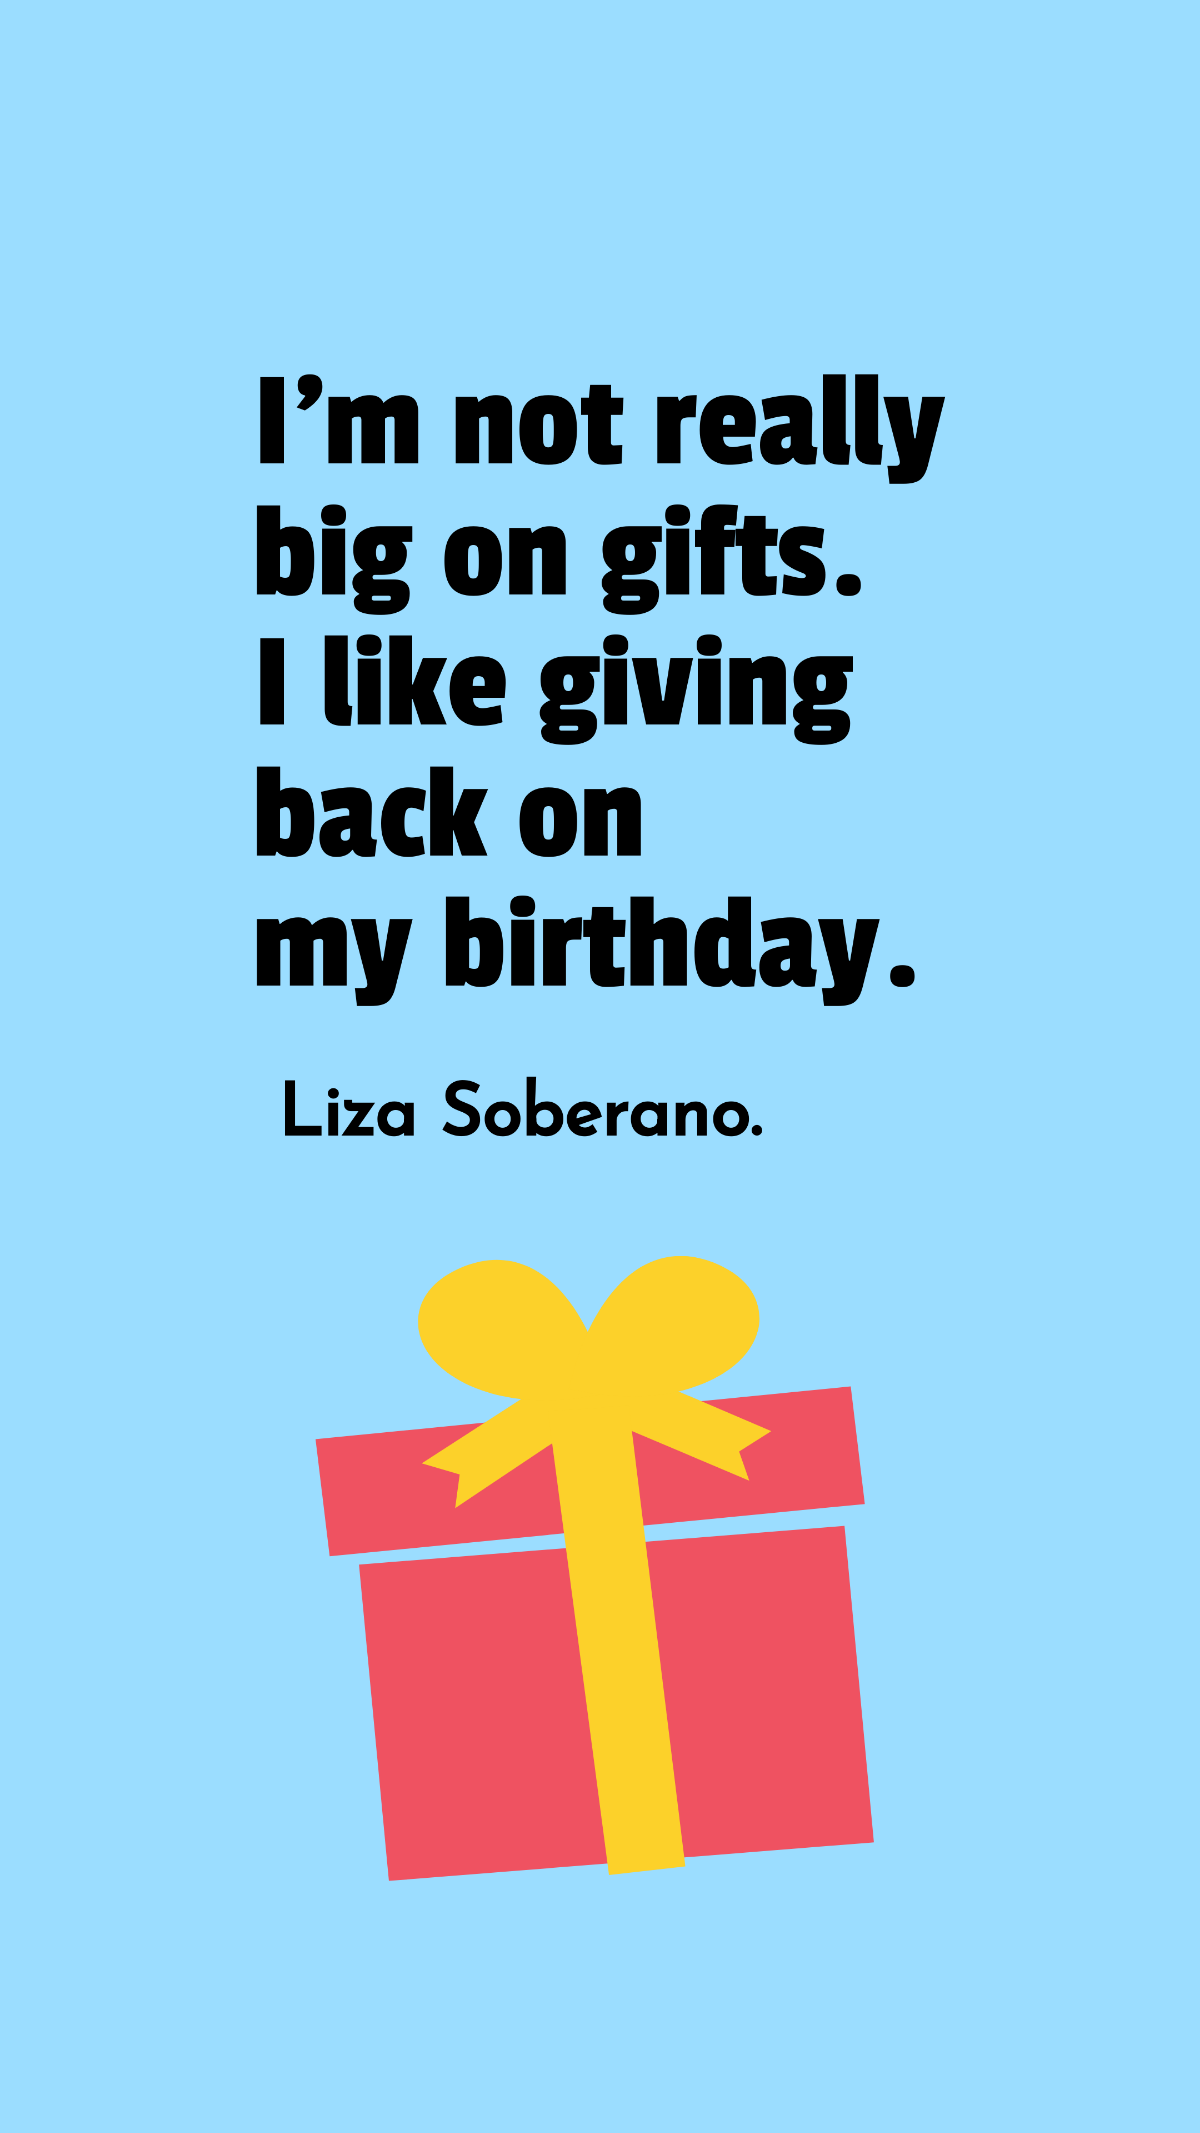 Liza Soberano - I'm not really big on gifts. I like giving back on my birthday.